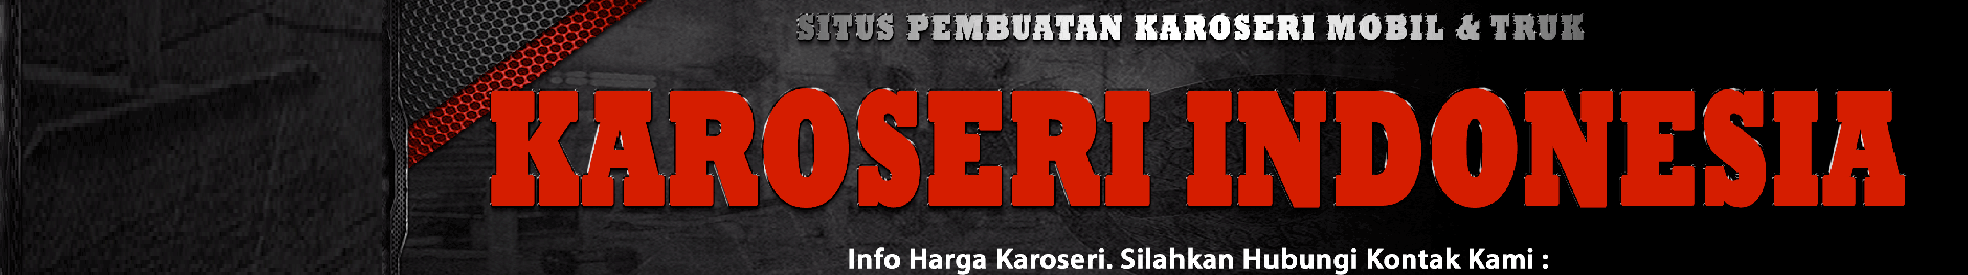 Karoseri Jakarta's profile banner